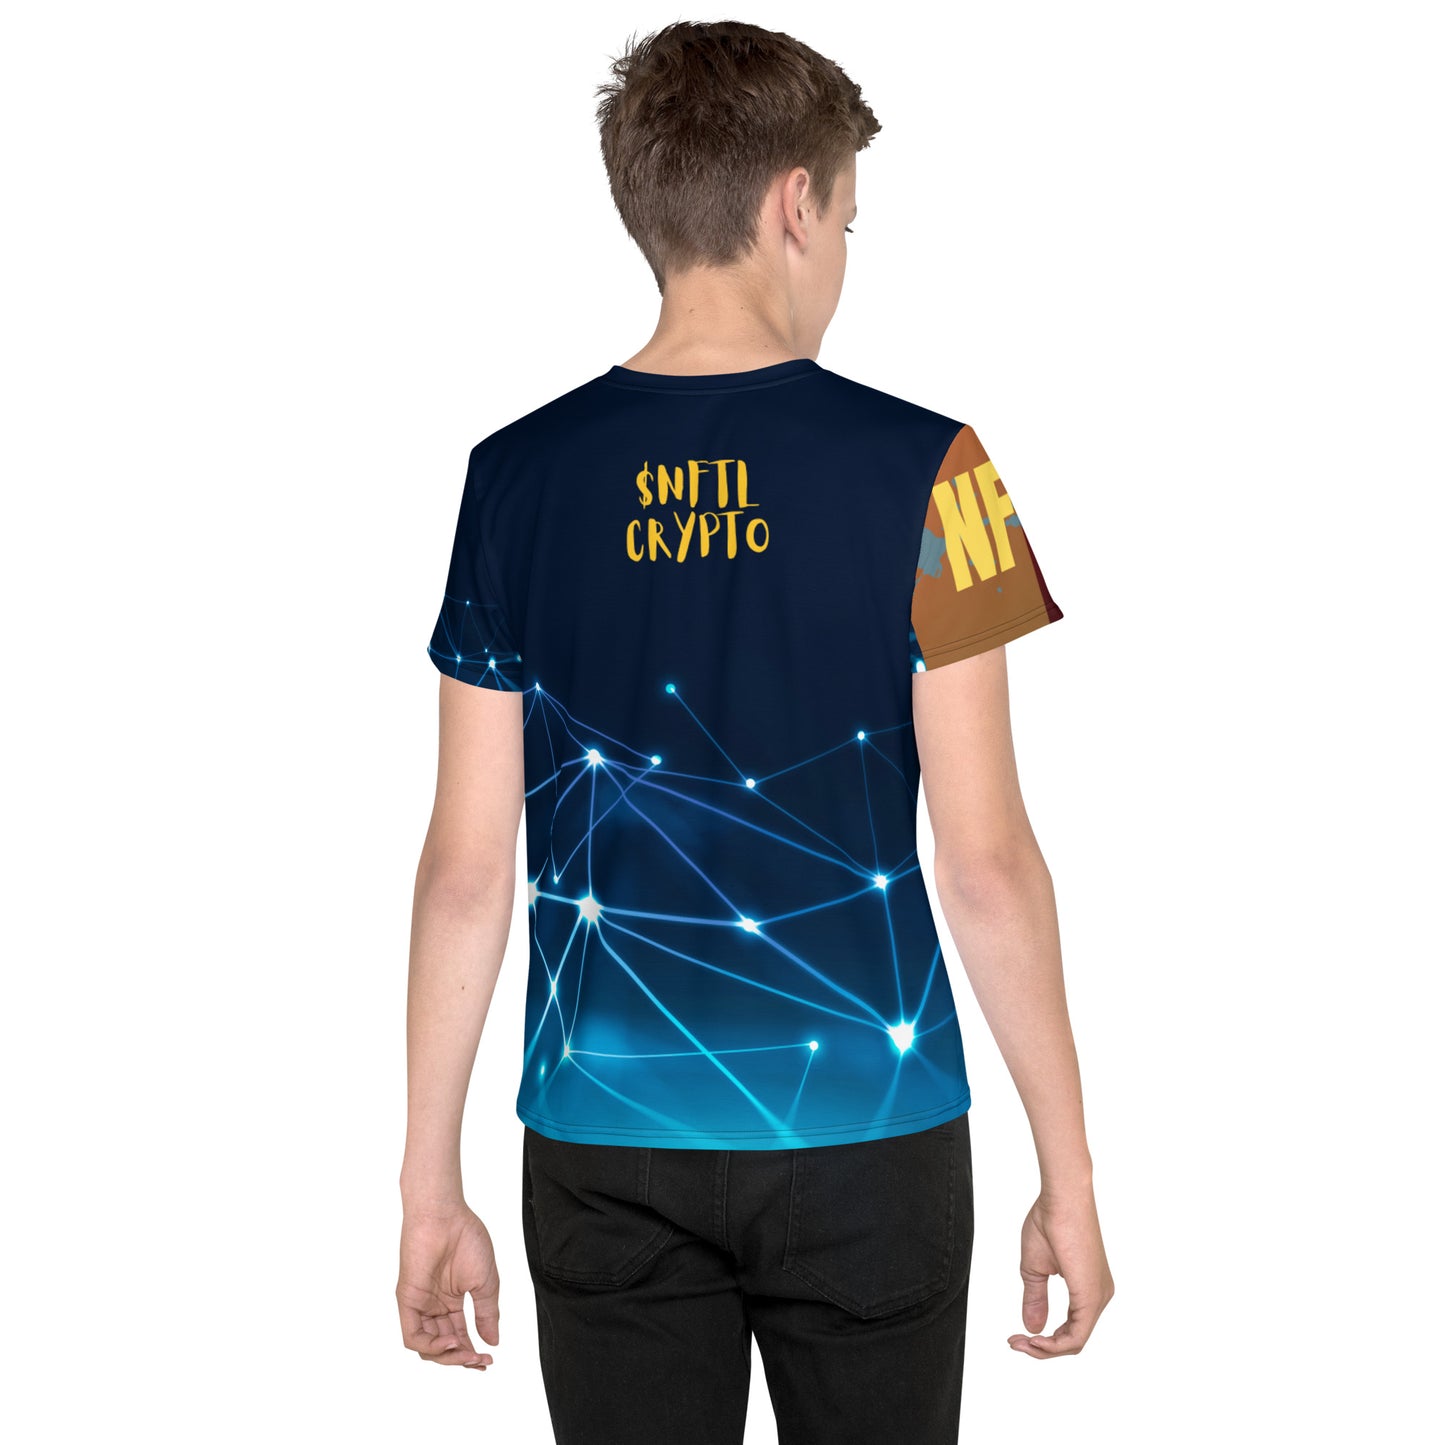 Unisex youth t-shirt $NFTL